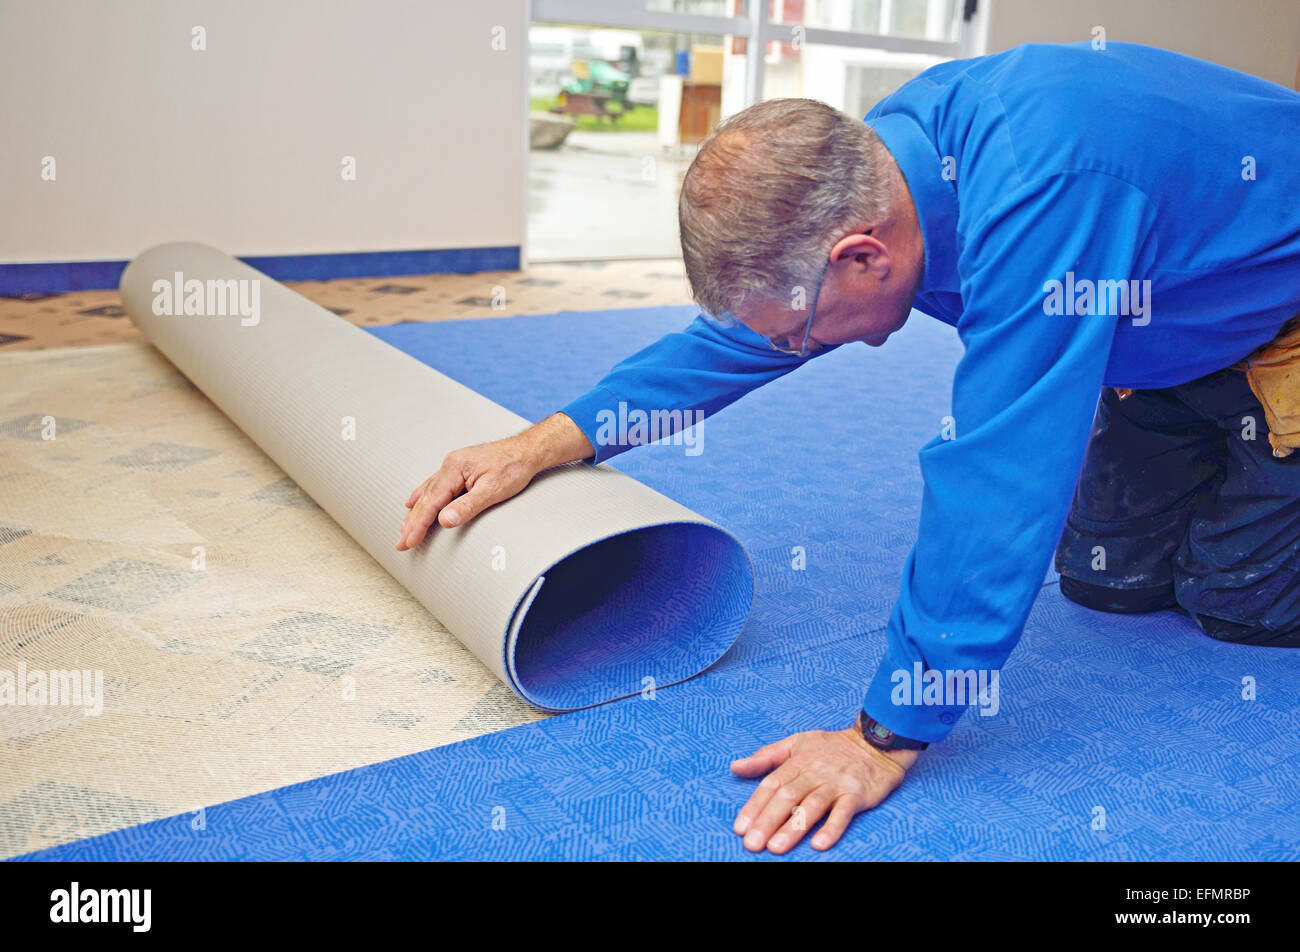 Carpet Knee Kicker Stock Photo - Download Image Now - Carpet